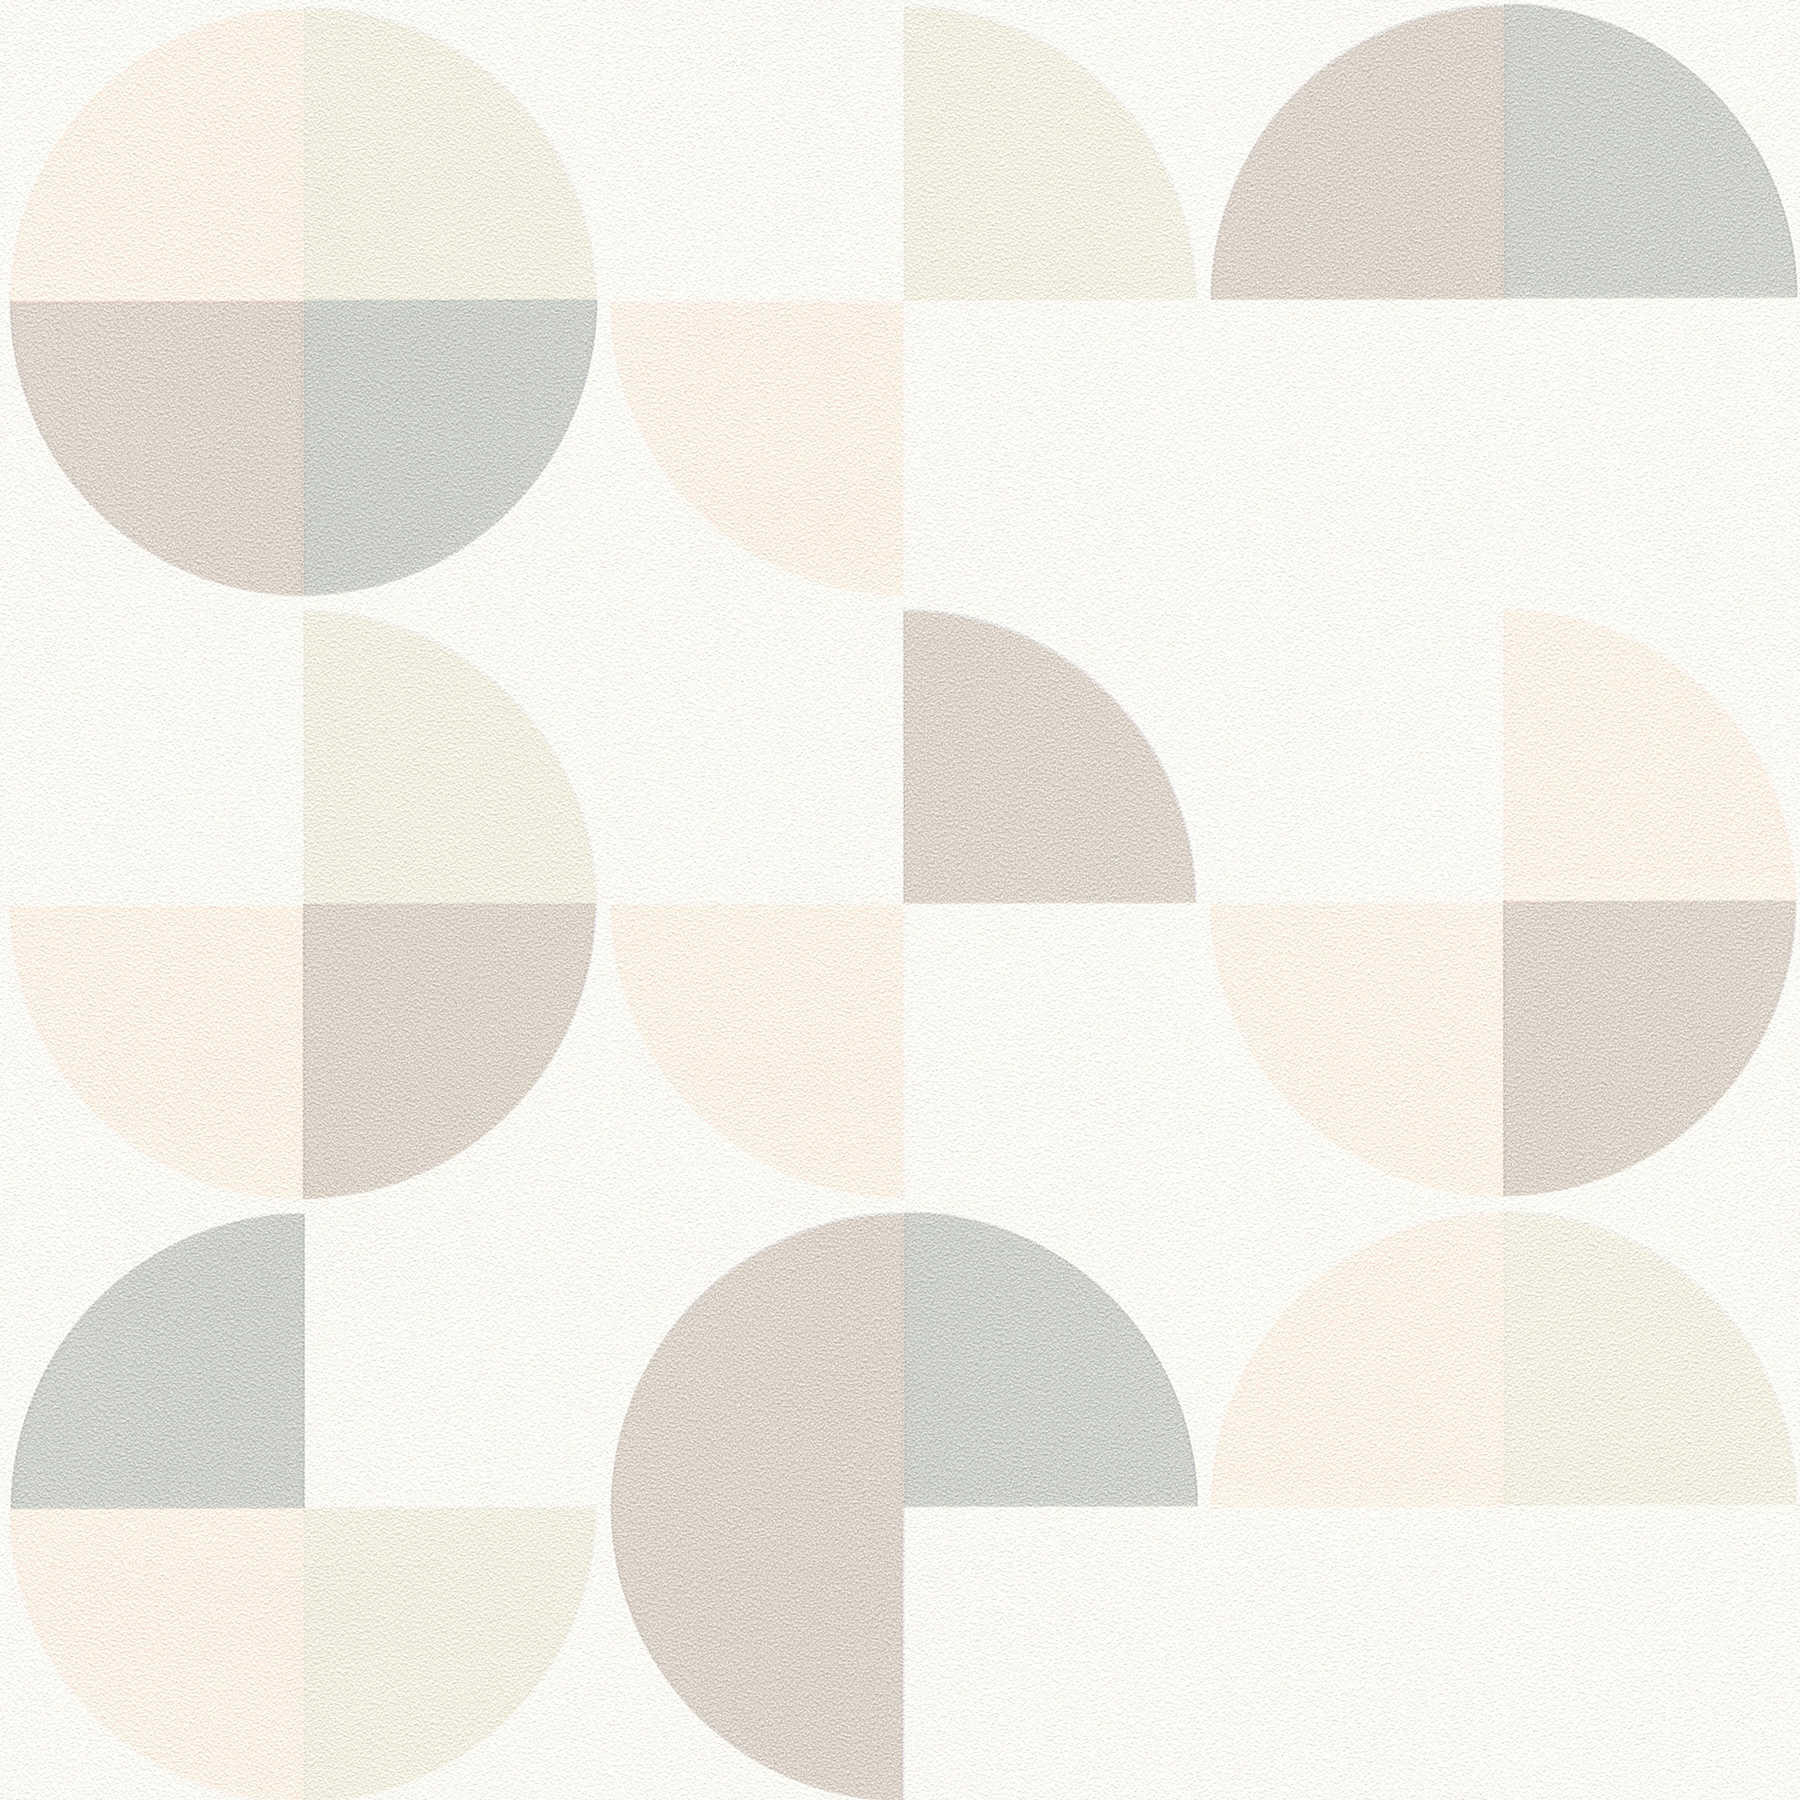         Geometrische Mustertapete im Scandinavian Style – Grau, Rosa, Beige
    